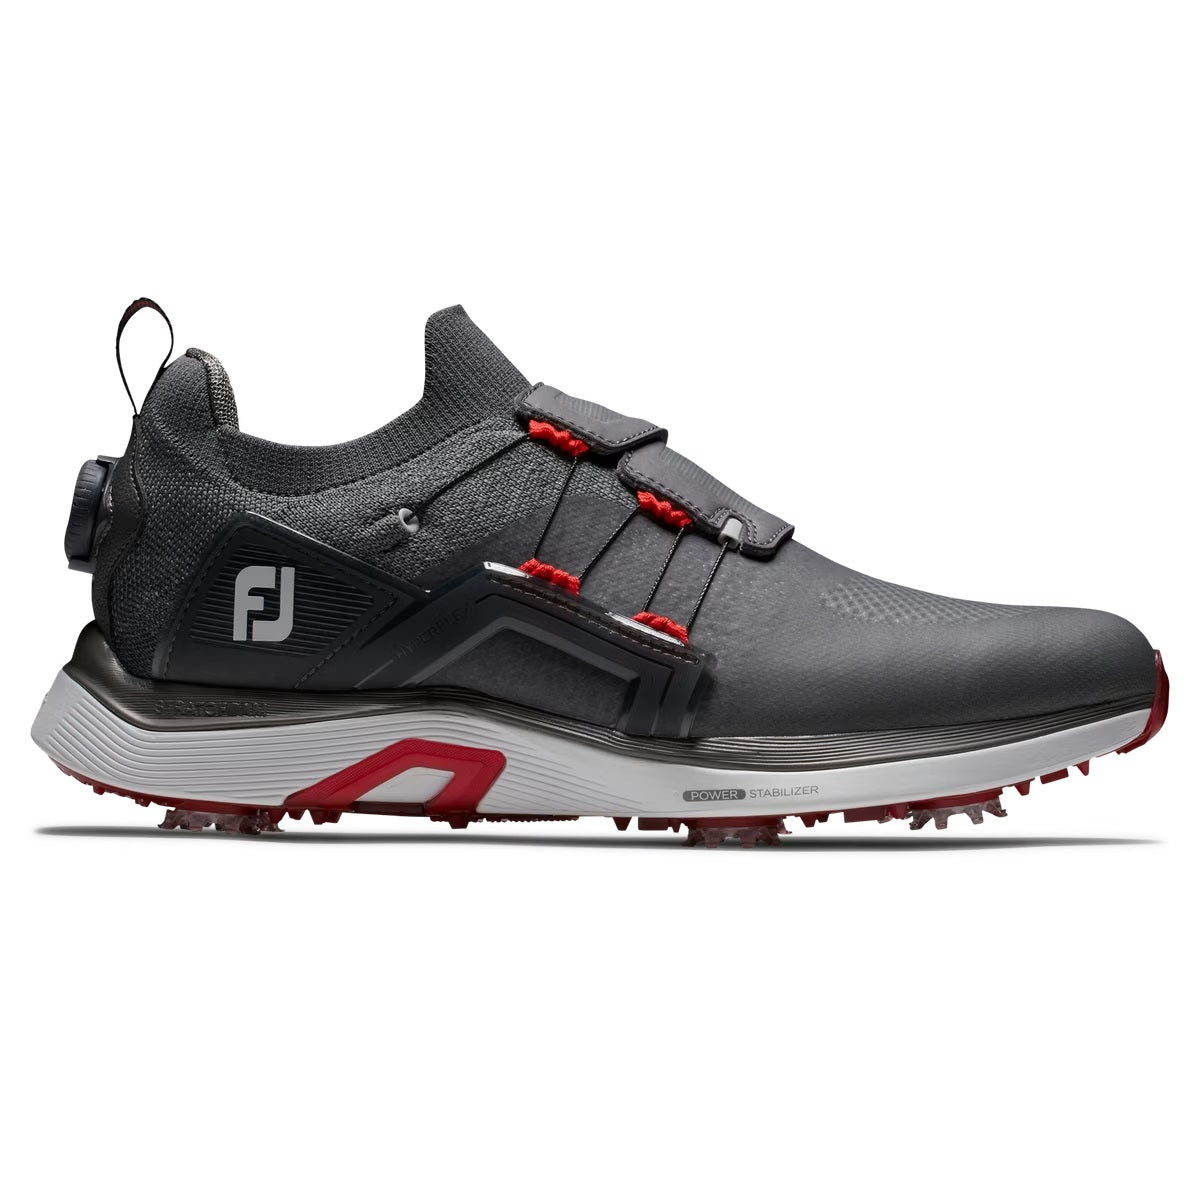 FootJoy HyperFlex Boa Golf Shoes 51405 Charcoal/Grey/Red (Previous Season Style)